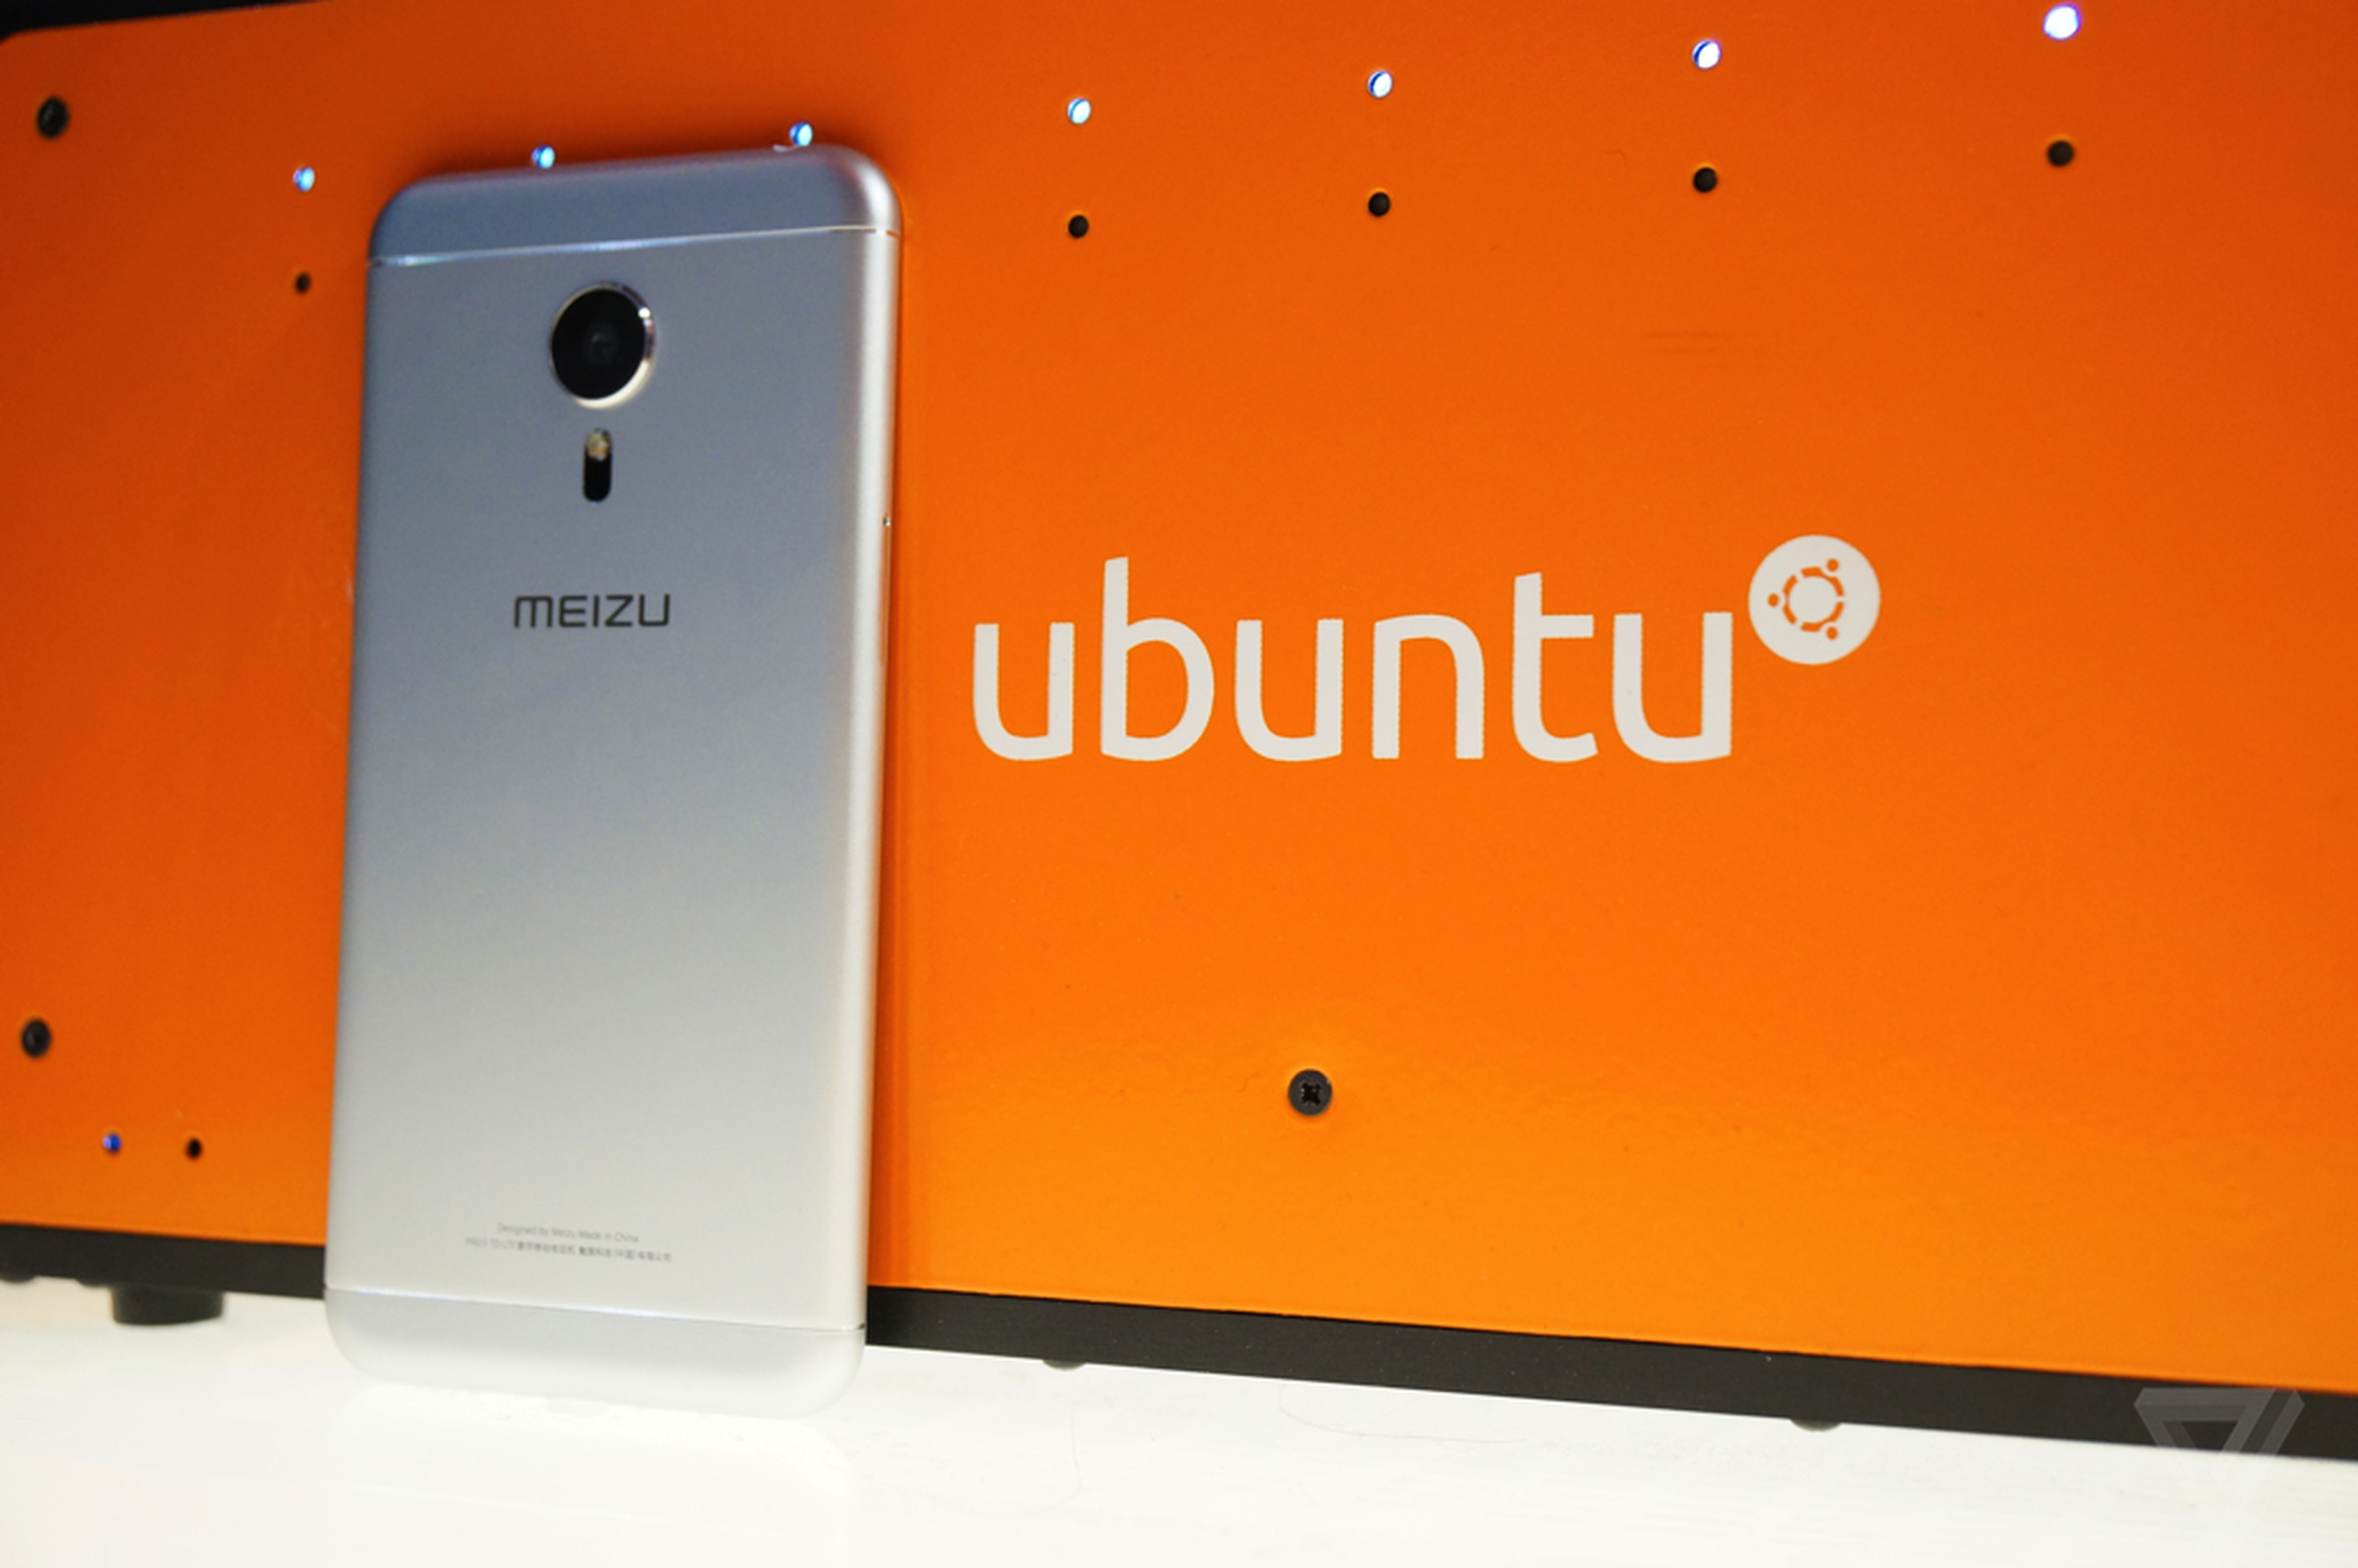 Meizu Pro 5 Ubuntu Edition hands-on photos